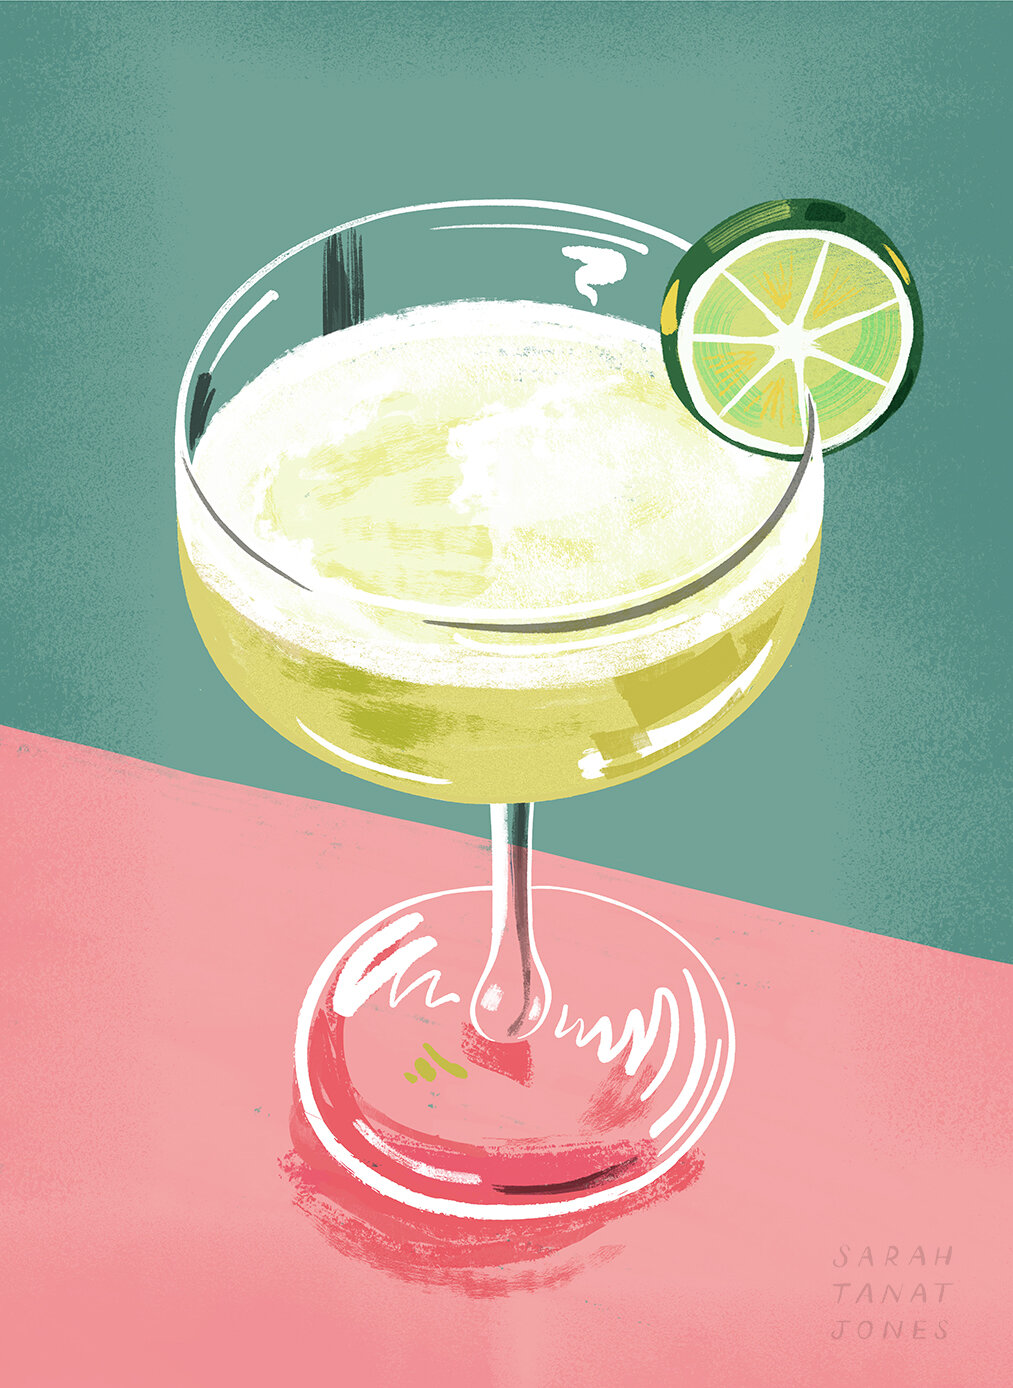 sarah tanat jones daiquairi cocktail illustration web.jpg